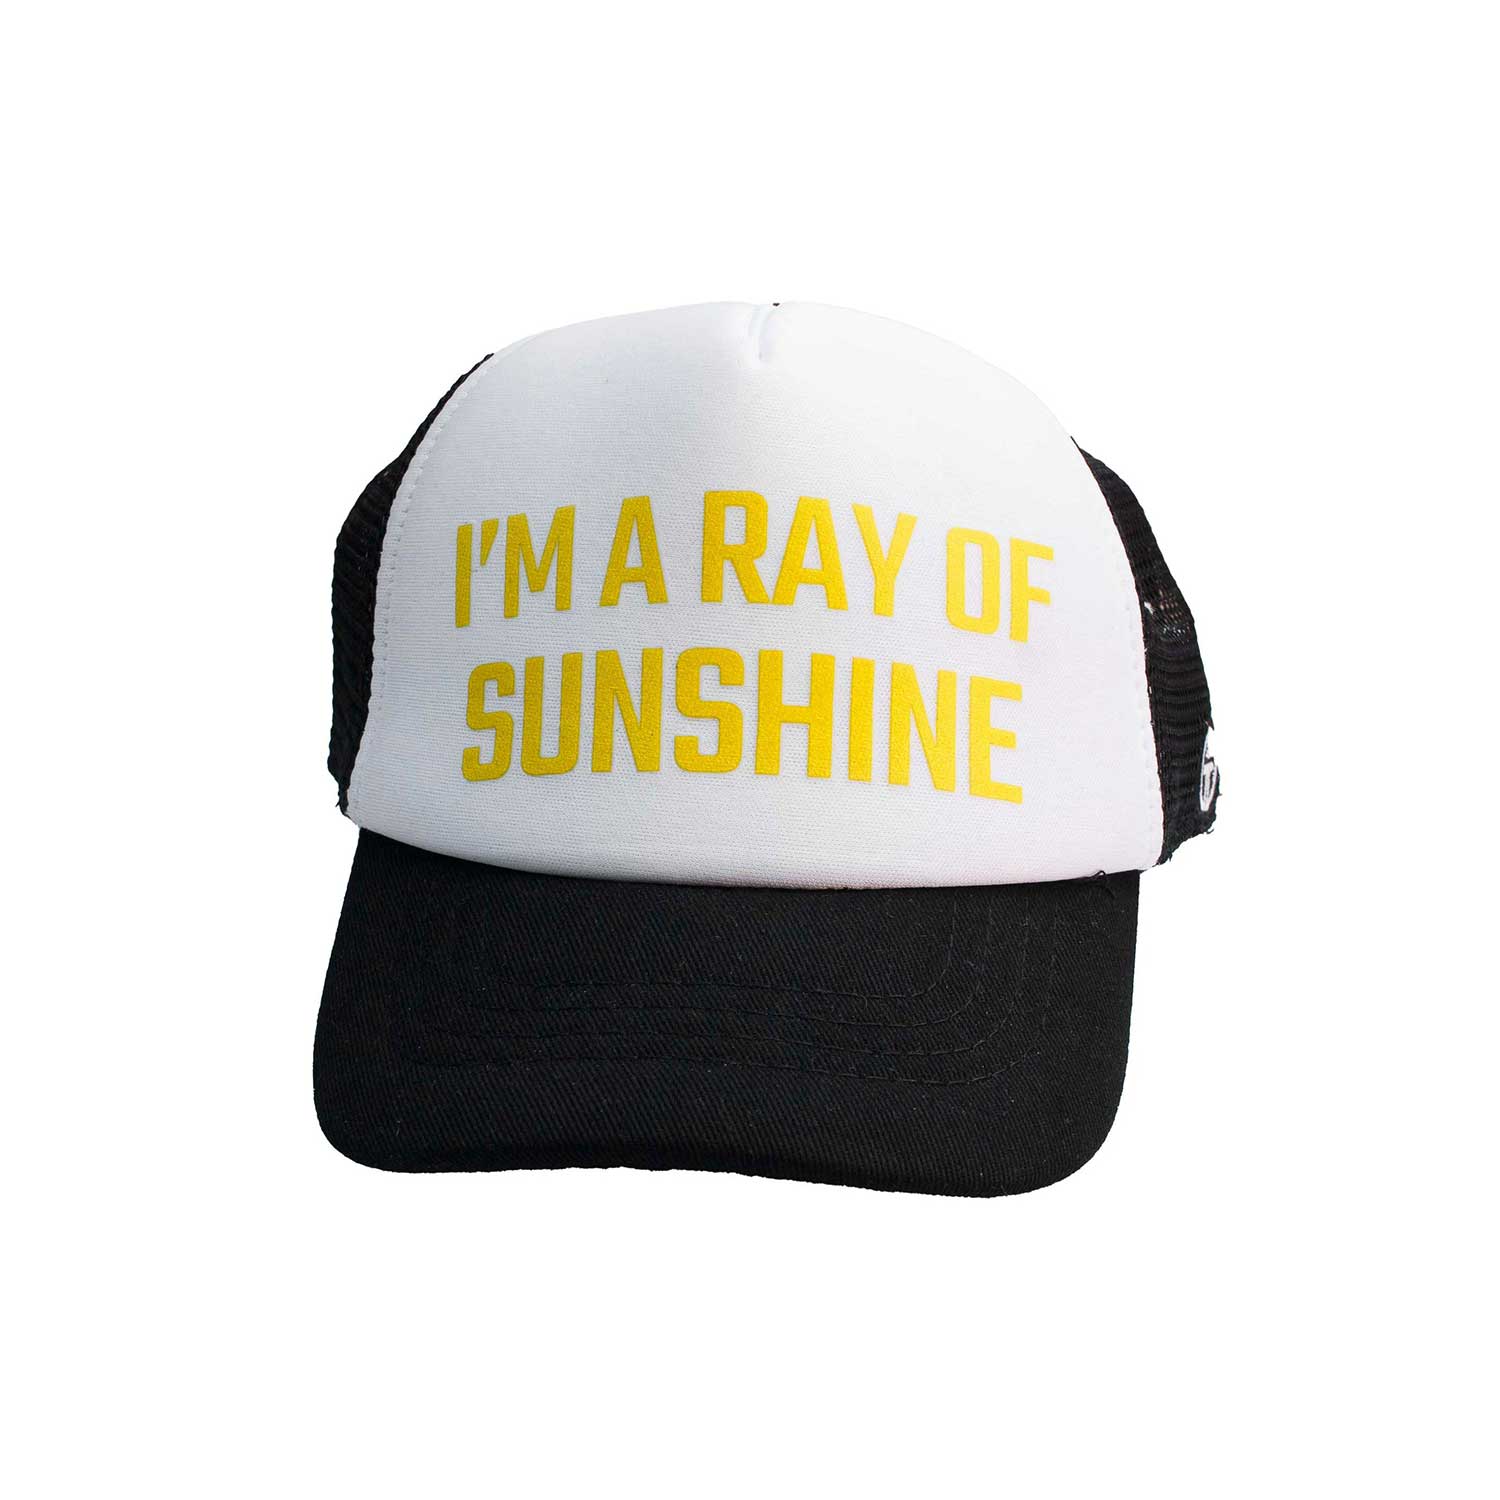 I'M A RAY OF SUNSHINE TRUCKER HAT